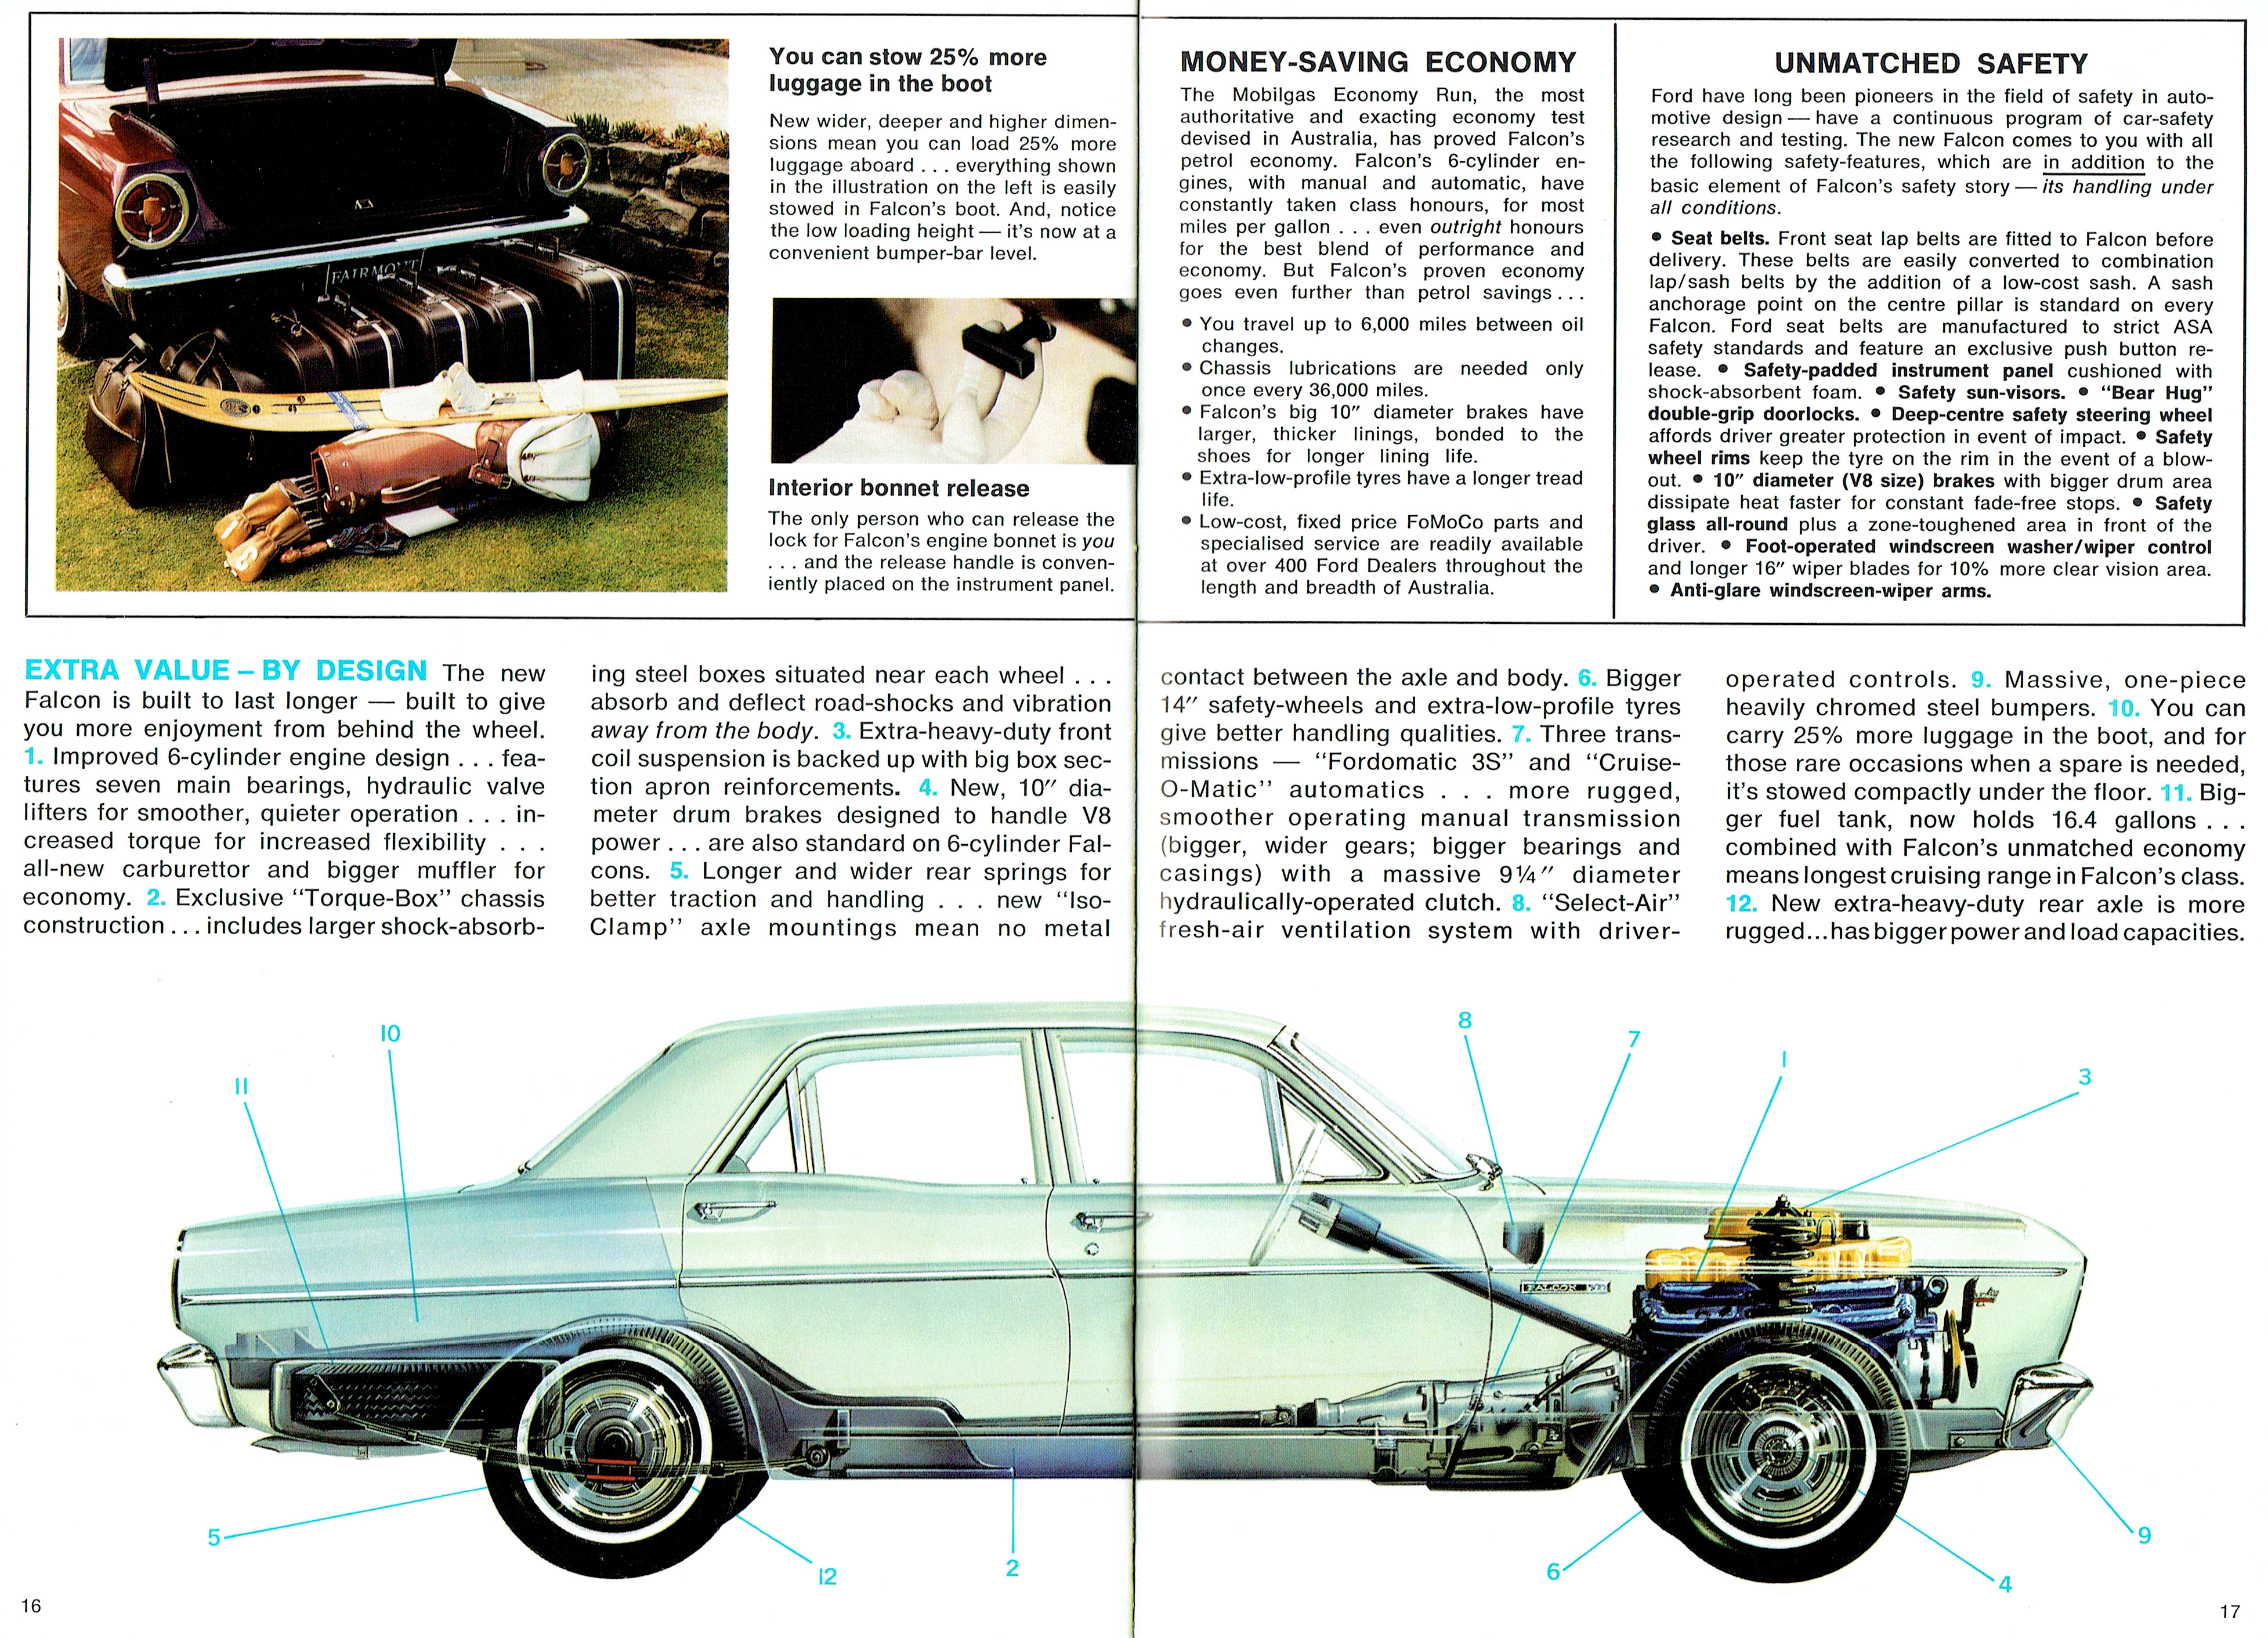 1966 Ford XR Falcon - Australia page_16_17